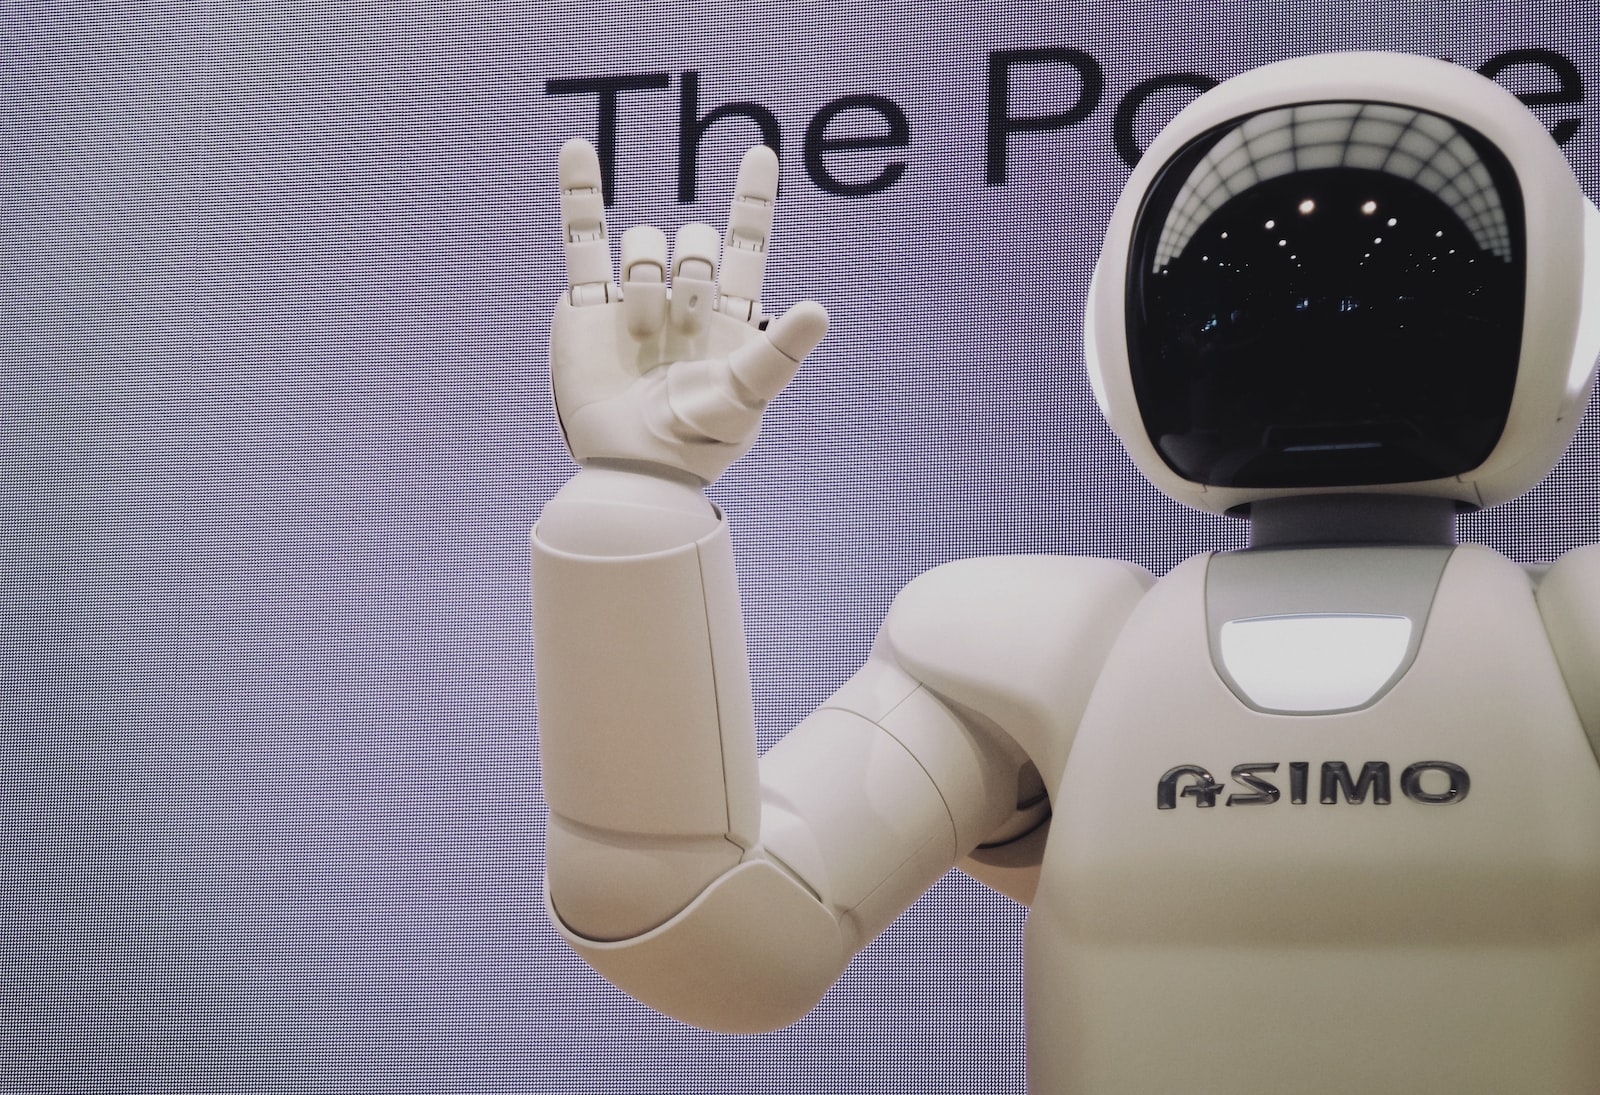 Asimo famous AI robot doing handsign